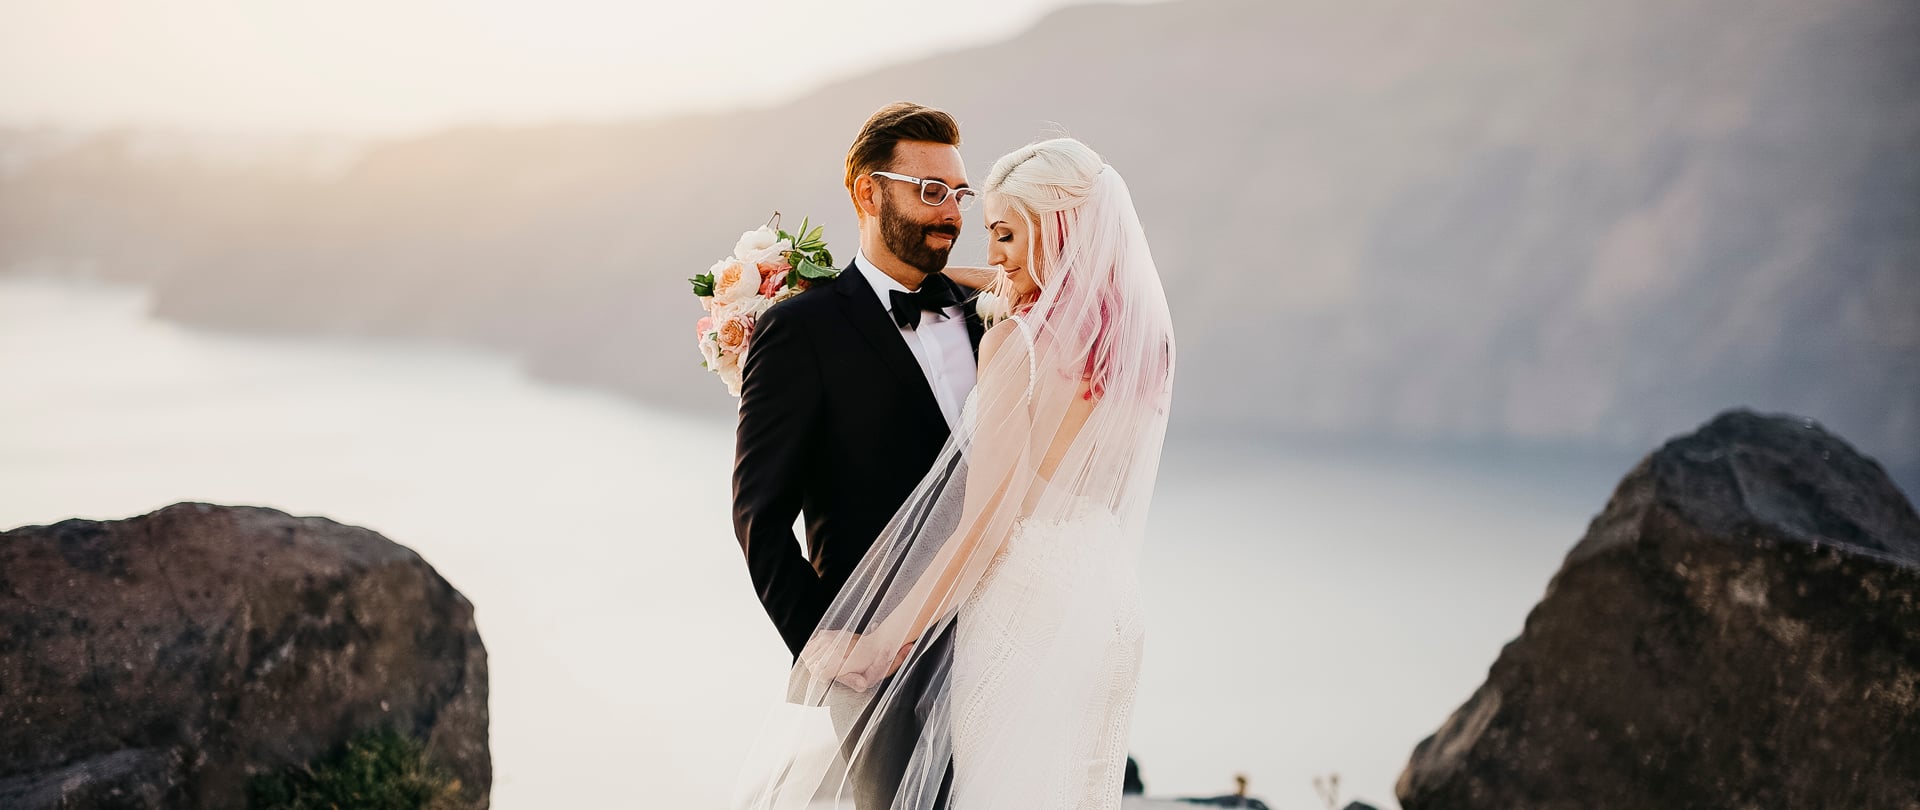 Chelsea & Jayse Wedding Video Filmed at Santorini, Greece